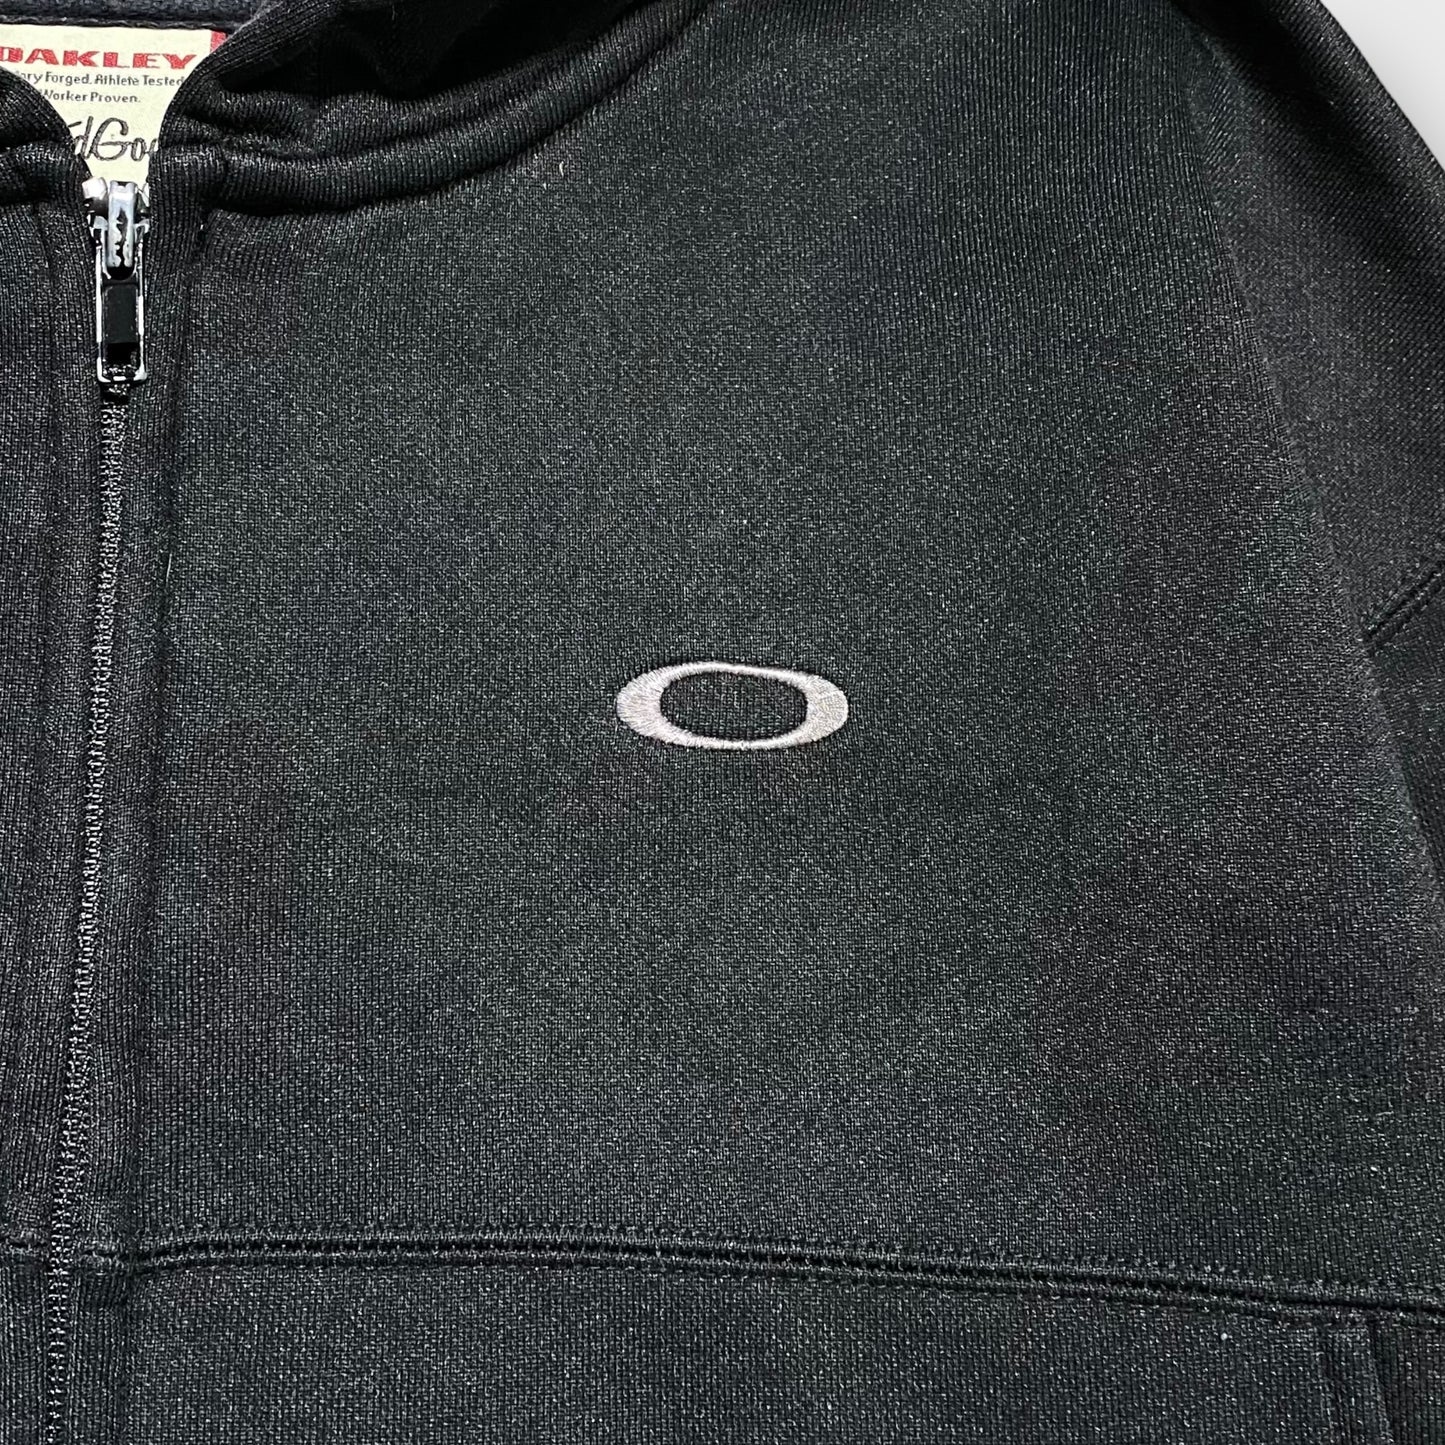 00's "OAKLEY" Full zip hoodie